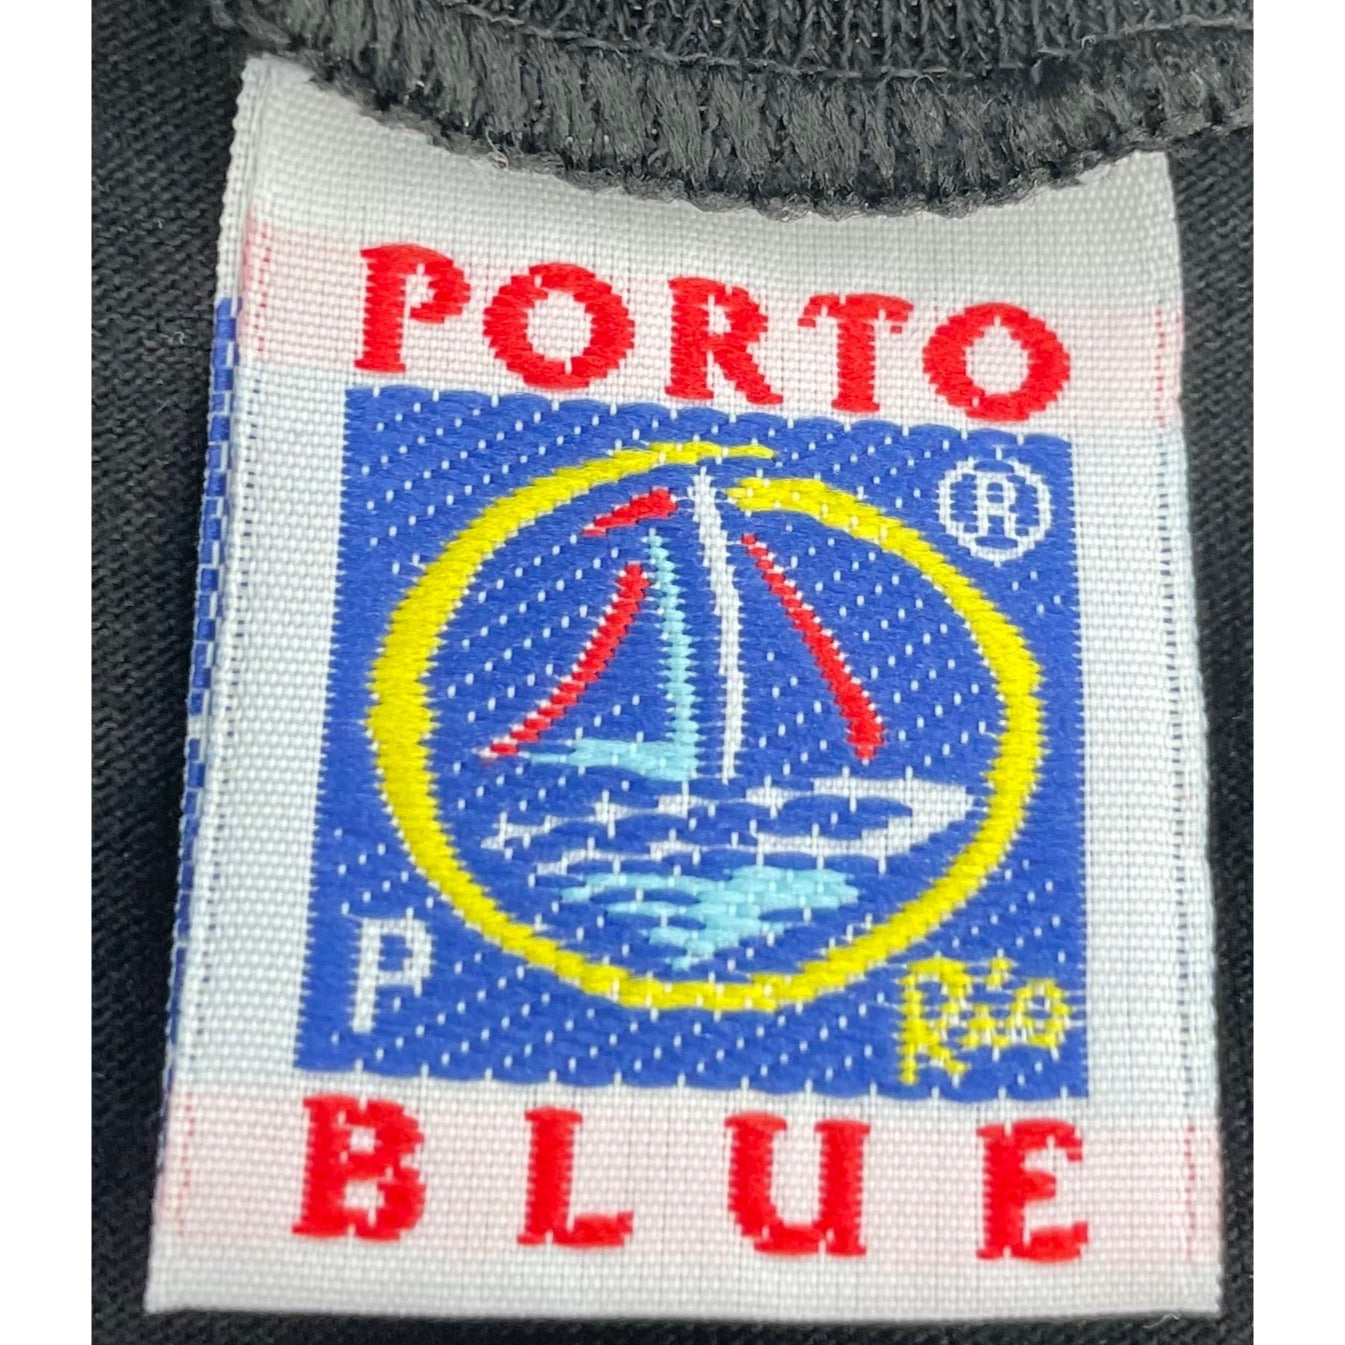 Porto Blue Men's Size Medium Black/Gold Ephesians 6:11 Graphic Shirt in Spanish